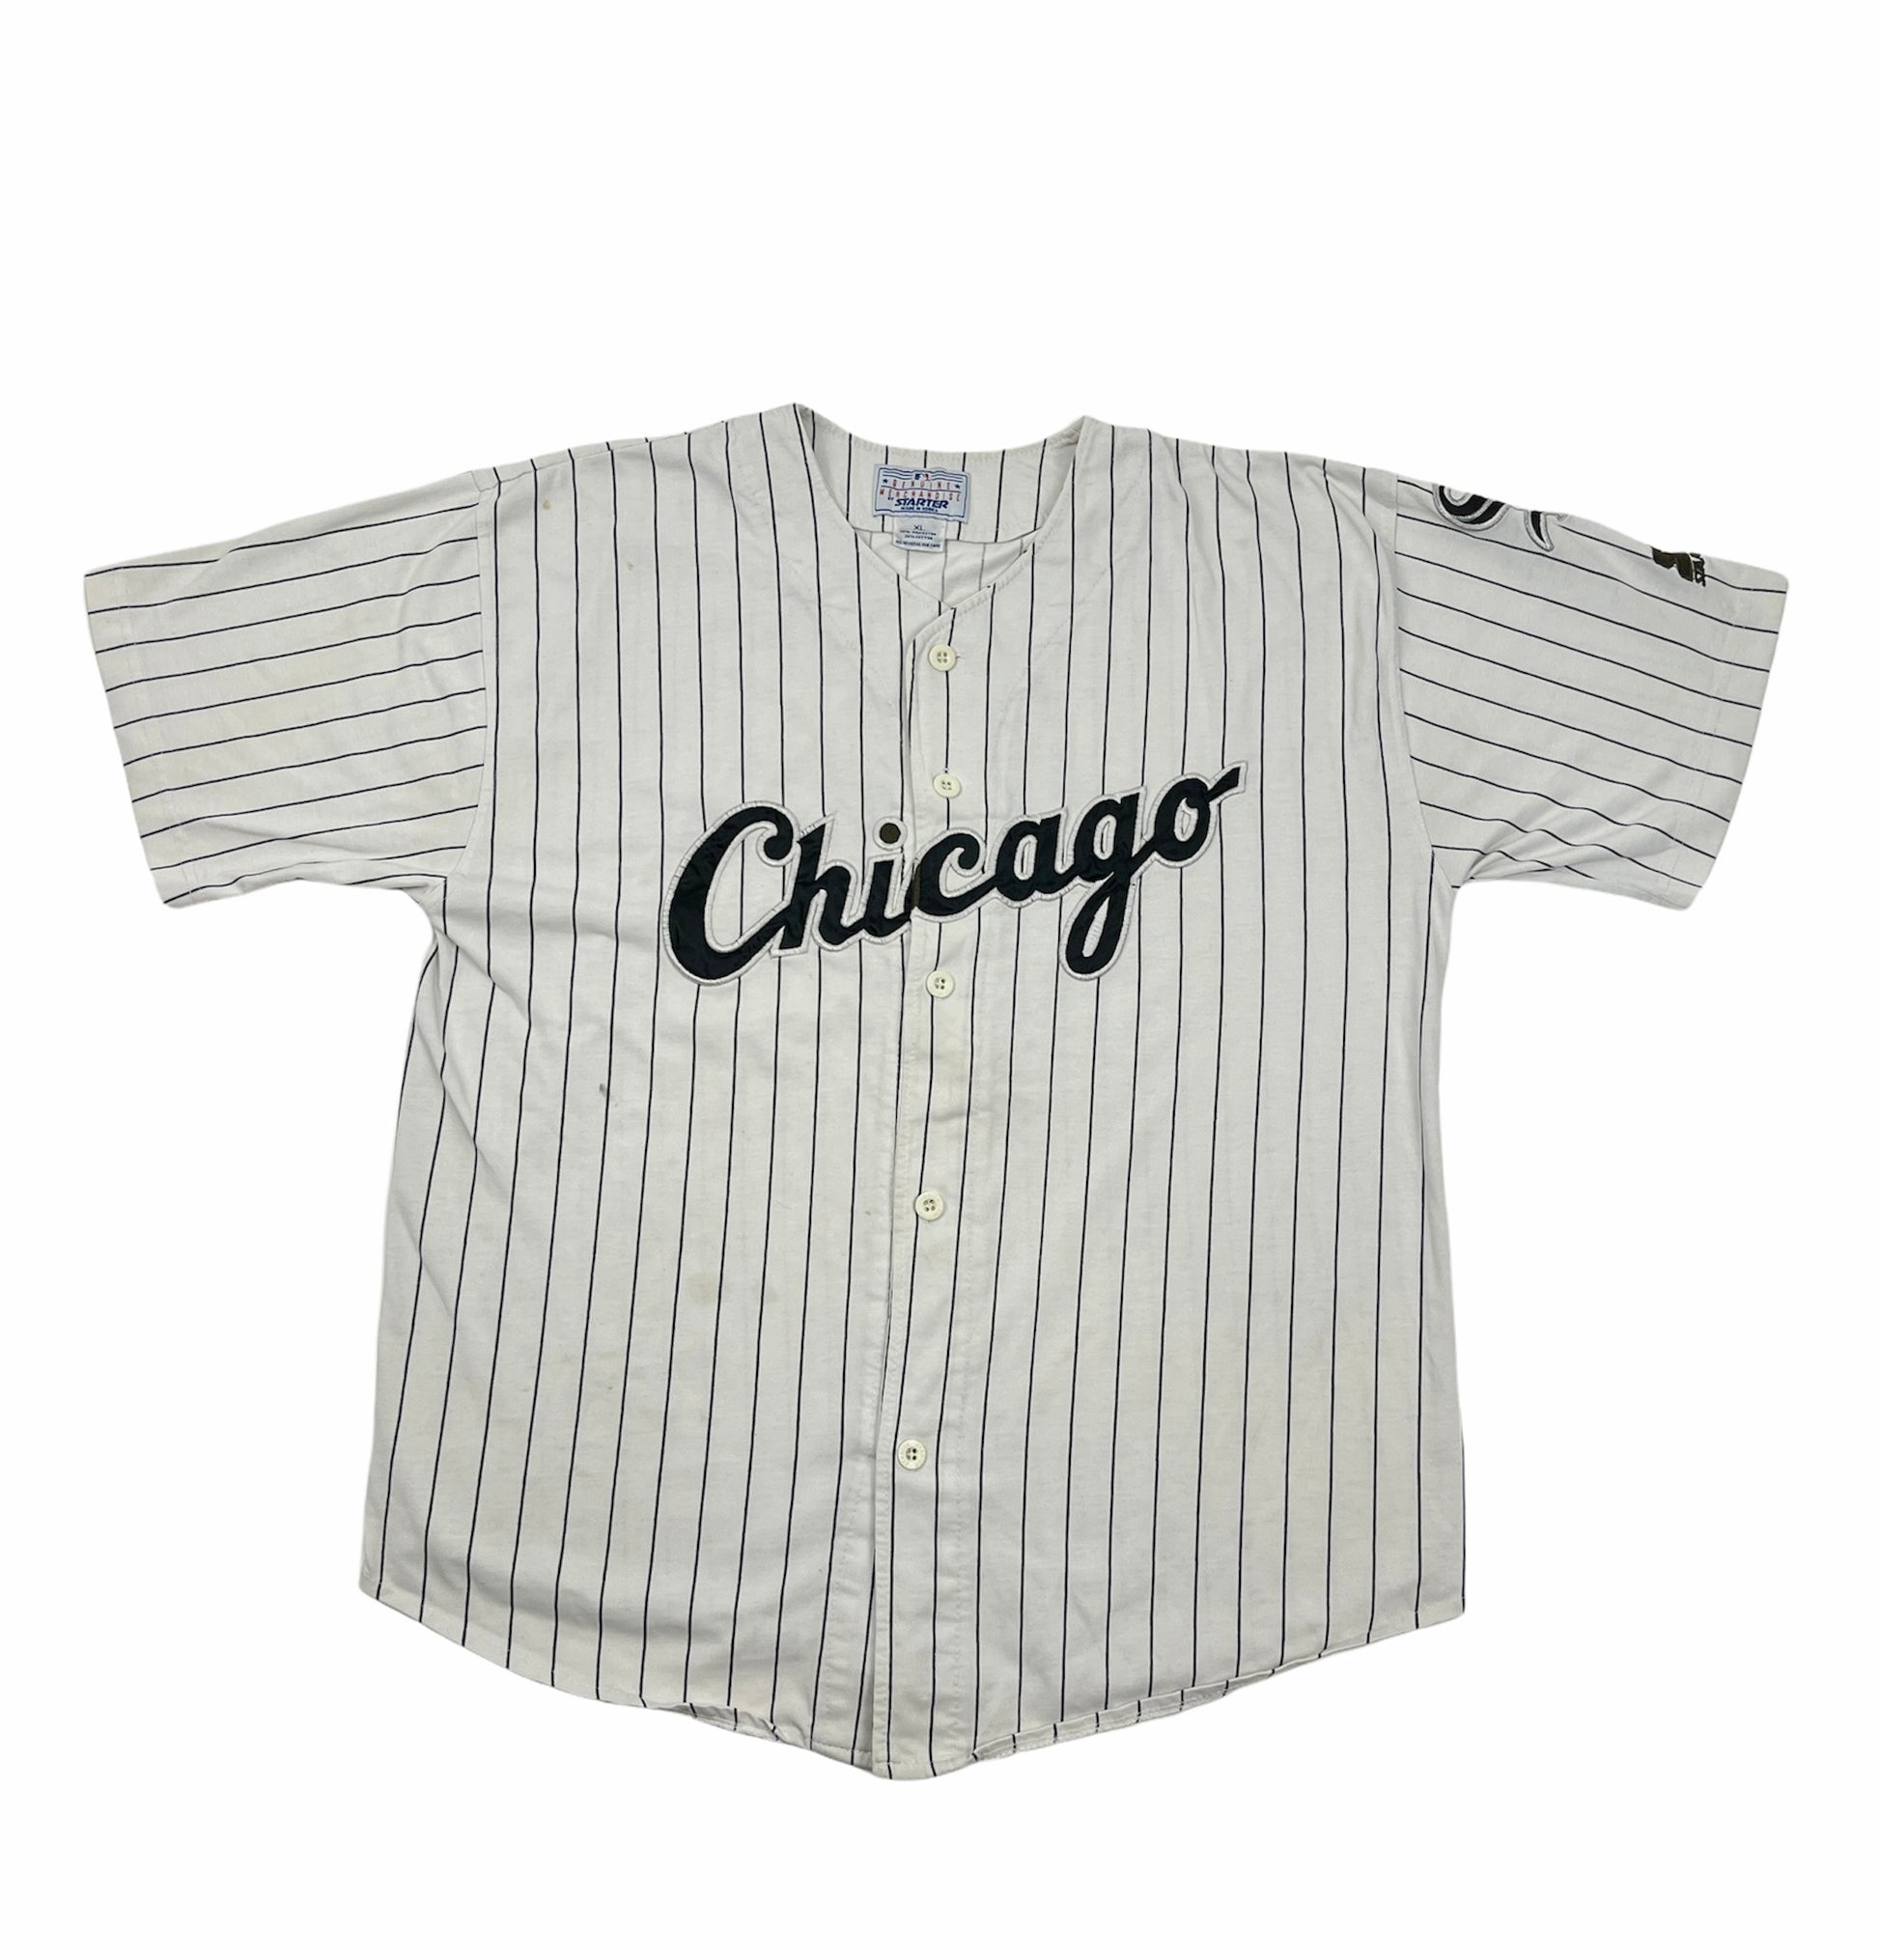 retro-city-threads Sloth Pirates Baseball Jersey (White) 6T